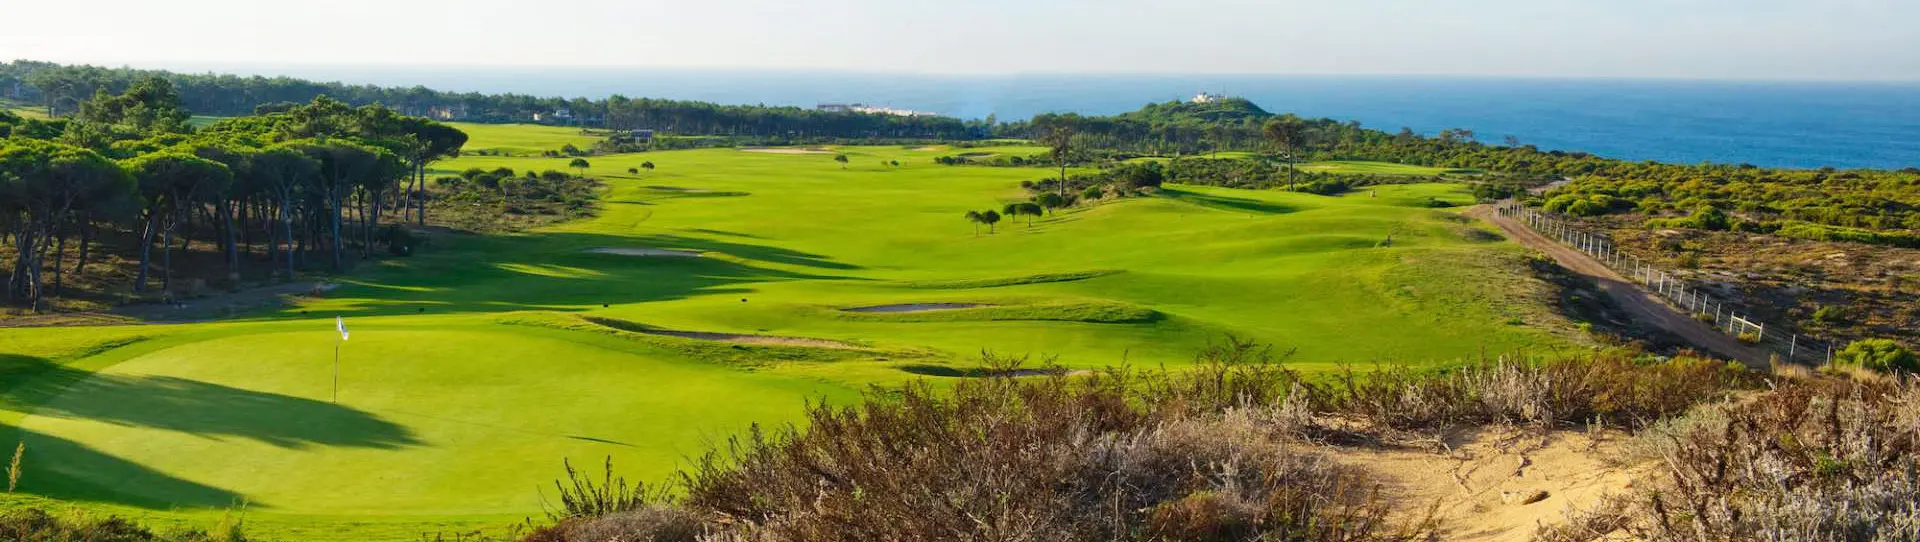 Portugal golf courses - Oitavos Dunes - Photo 2